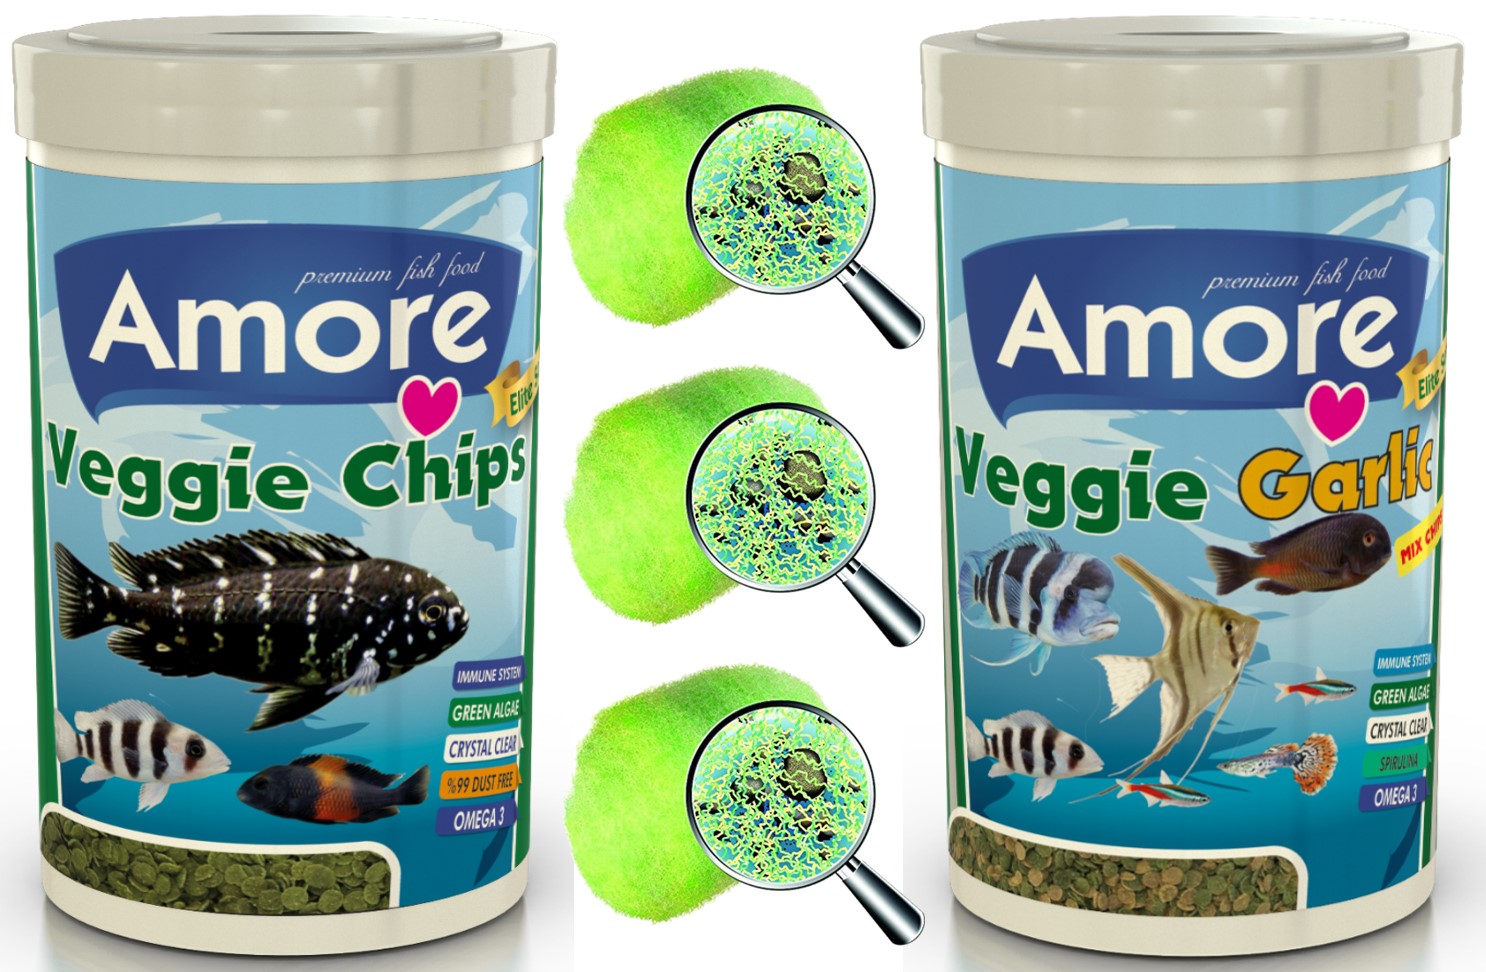 Elite Veggie Green Chips, Veggie Garlic Pro 1000ml 46-Protein Balık Yemi, Crystal Clear 3-Elyaf fotograf